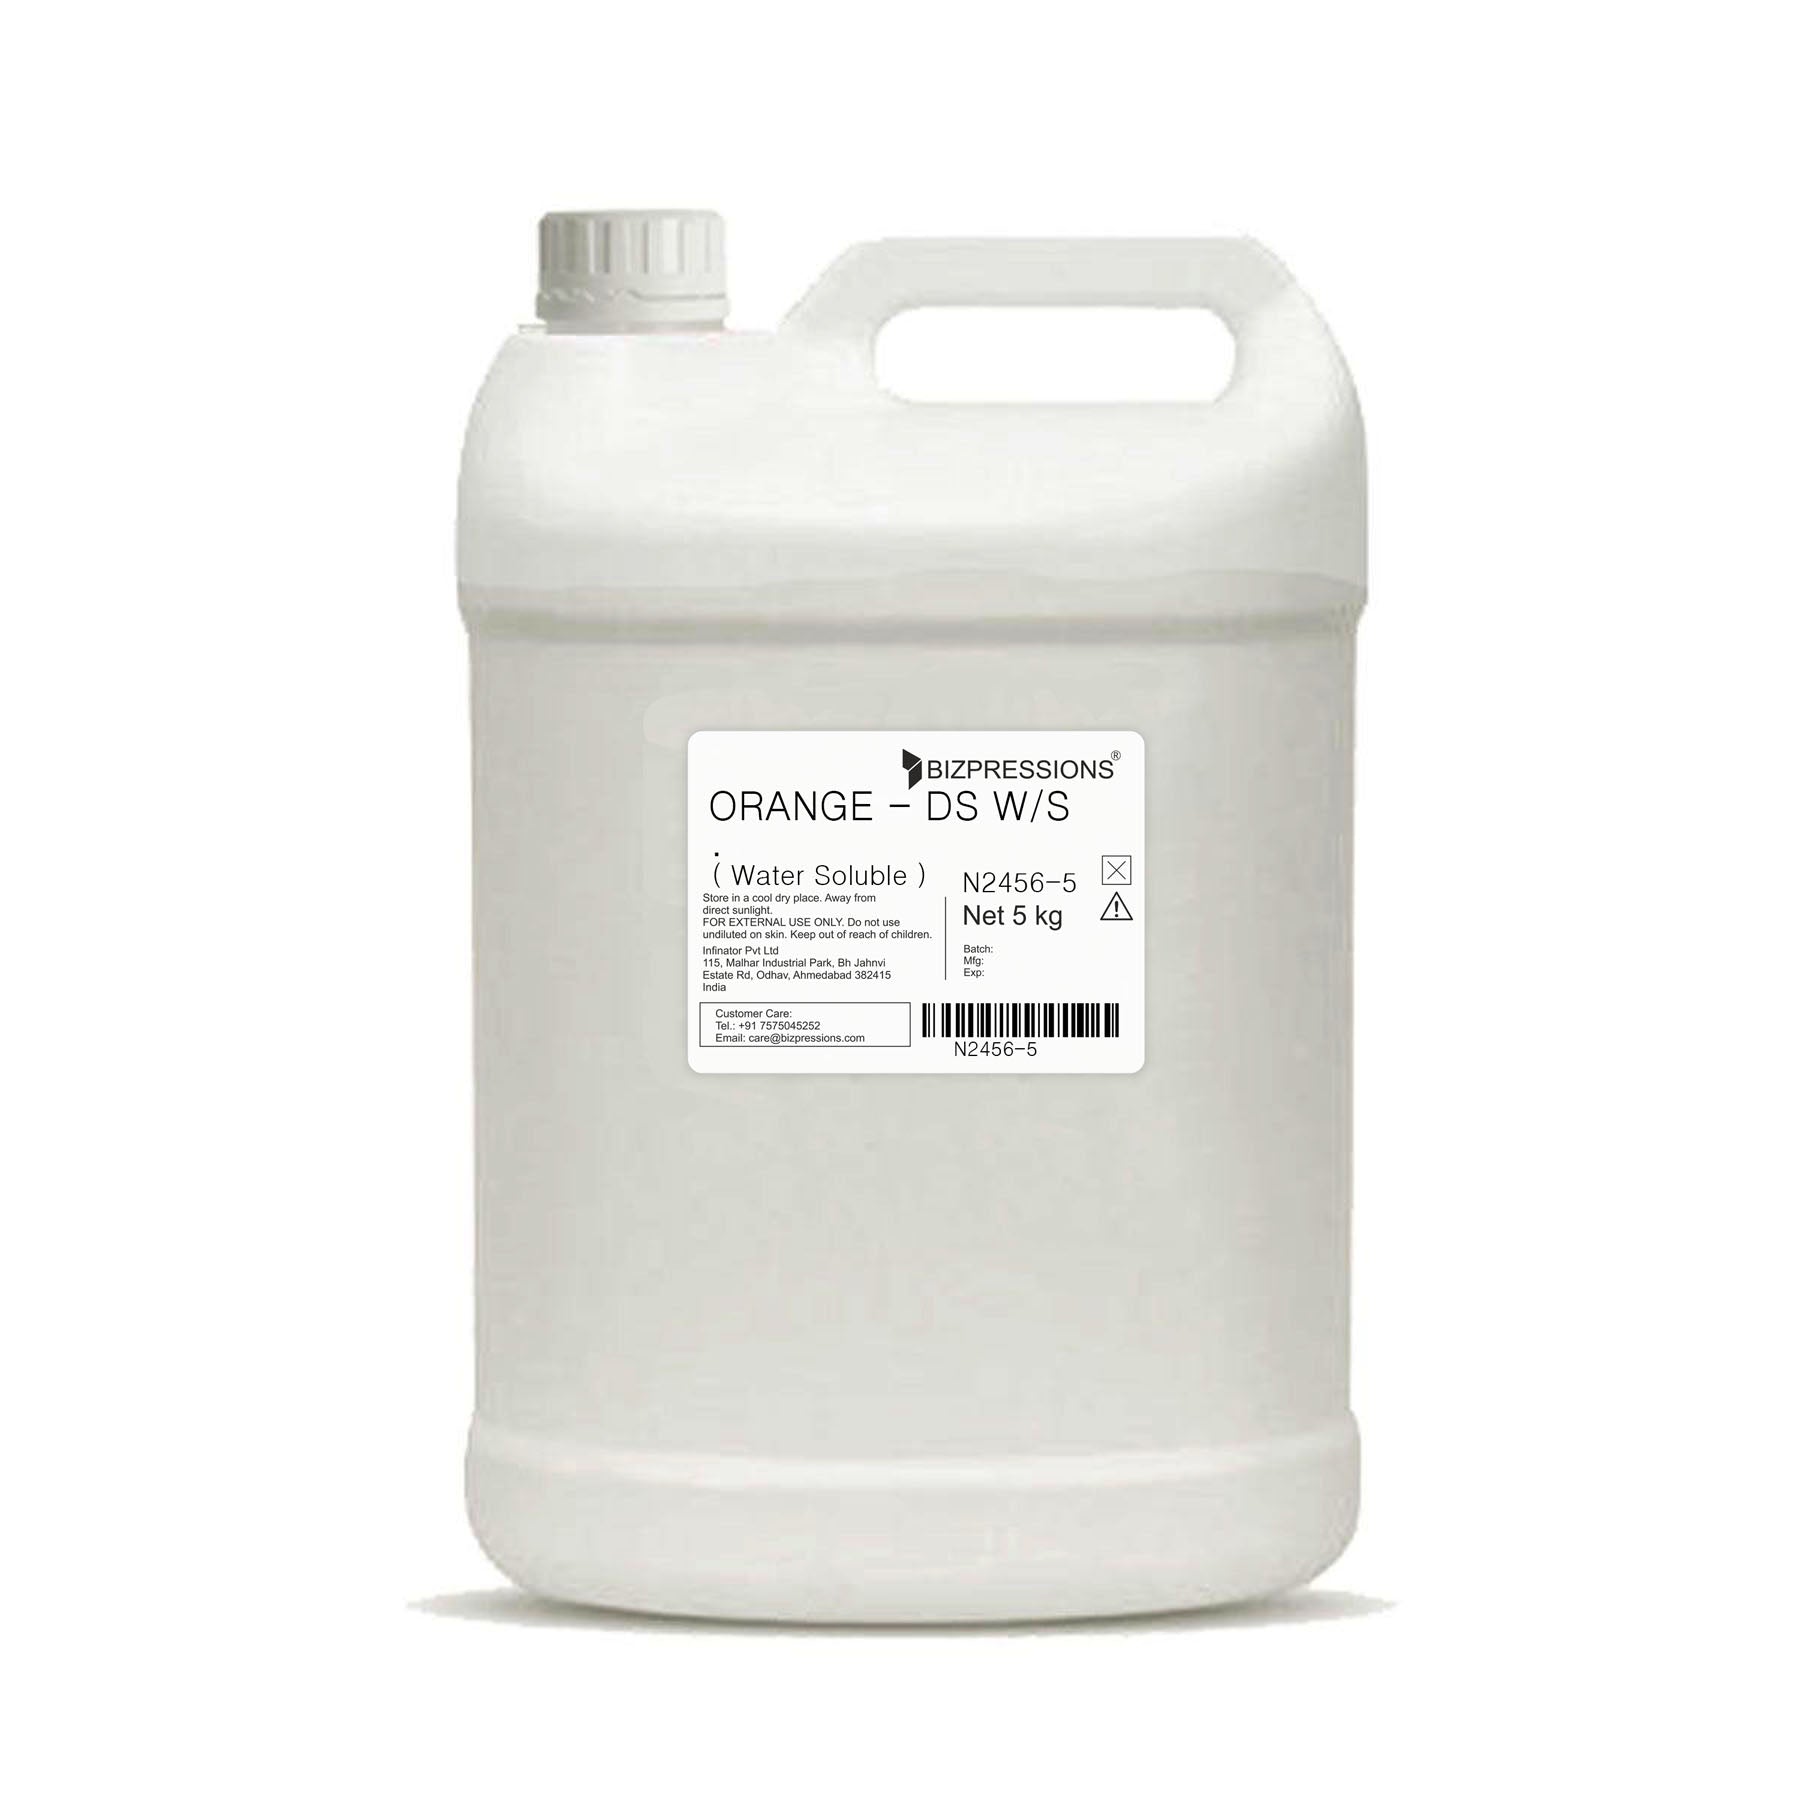 ORANGE - DS W/S - Fragrance ( Water Soluble ) - 5 kg